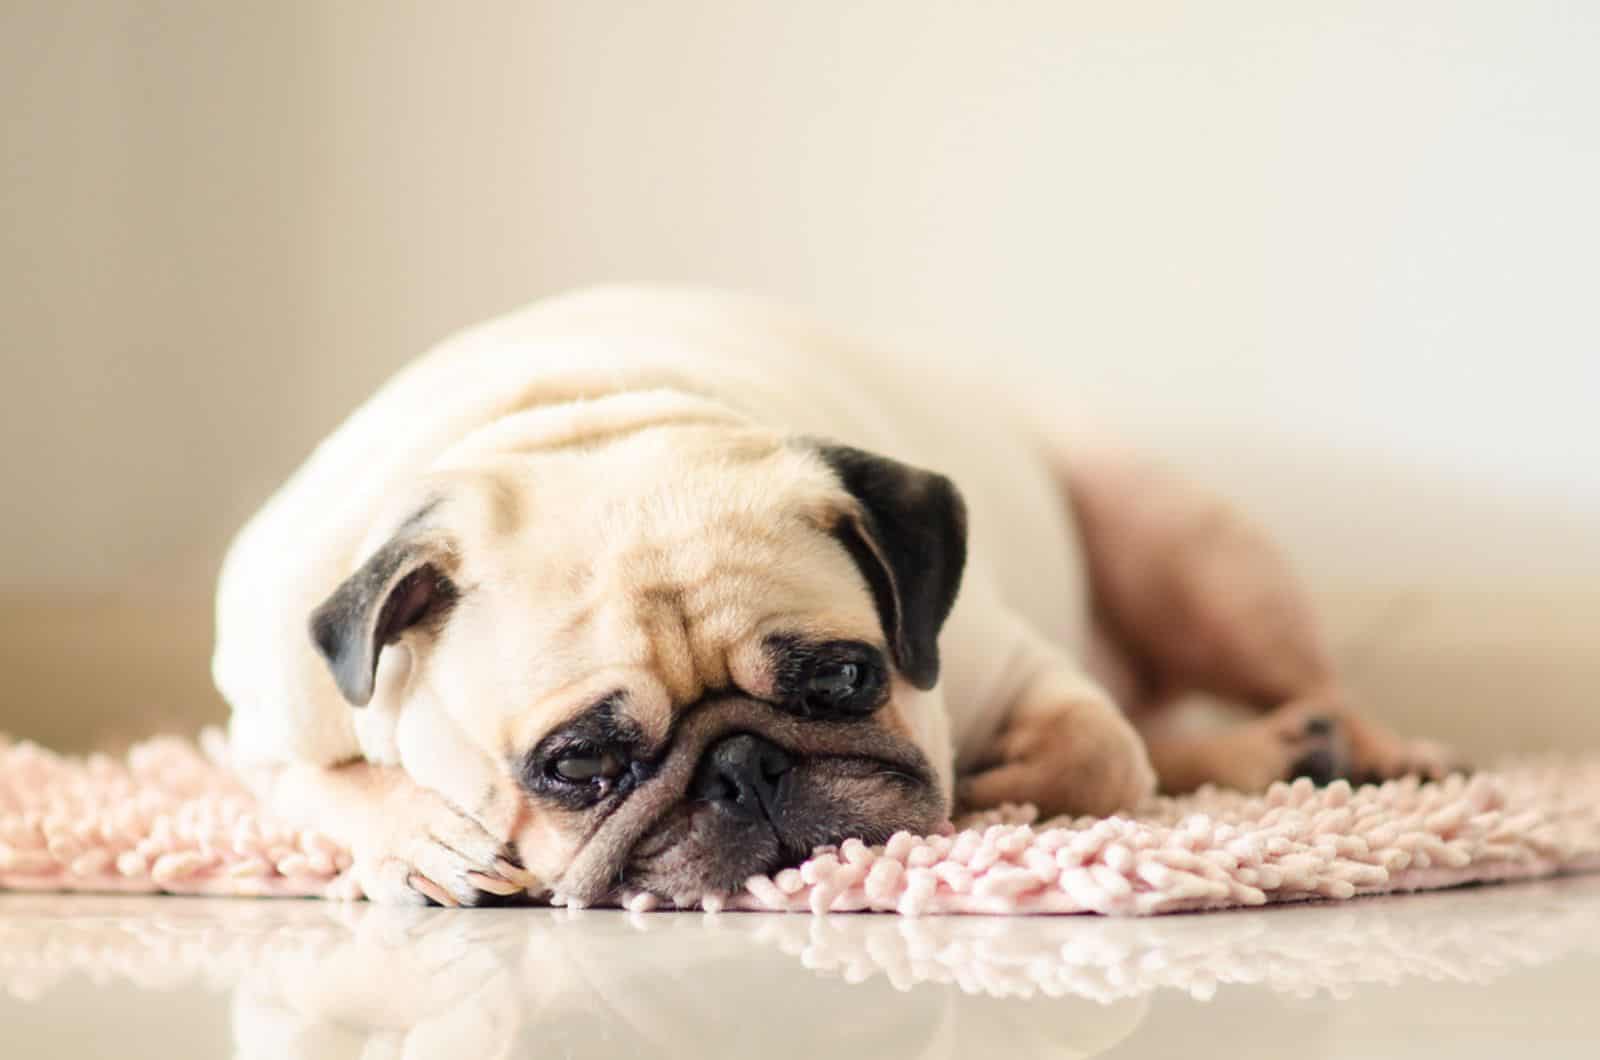 sad pug dog lying on the carpet